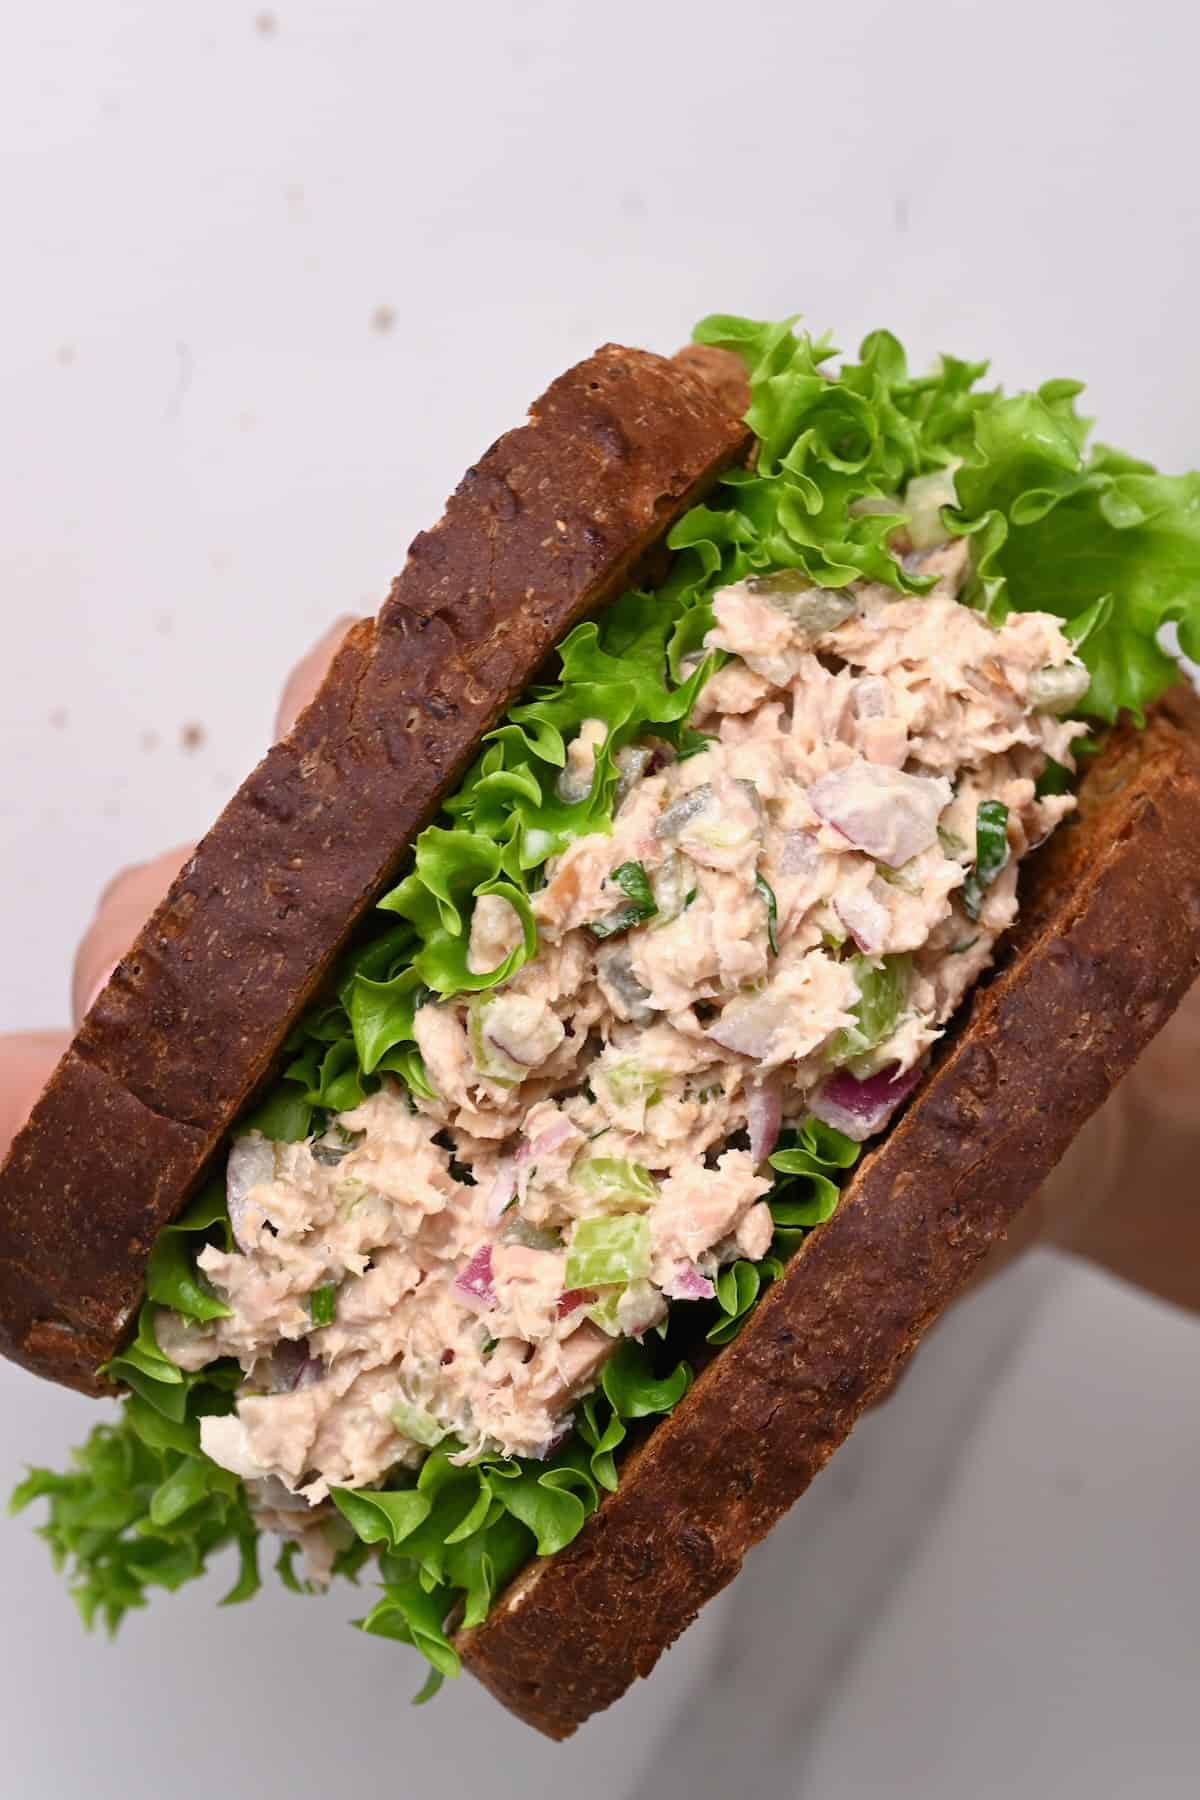 A tuna lettuce sandwich